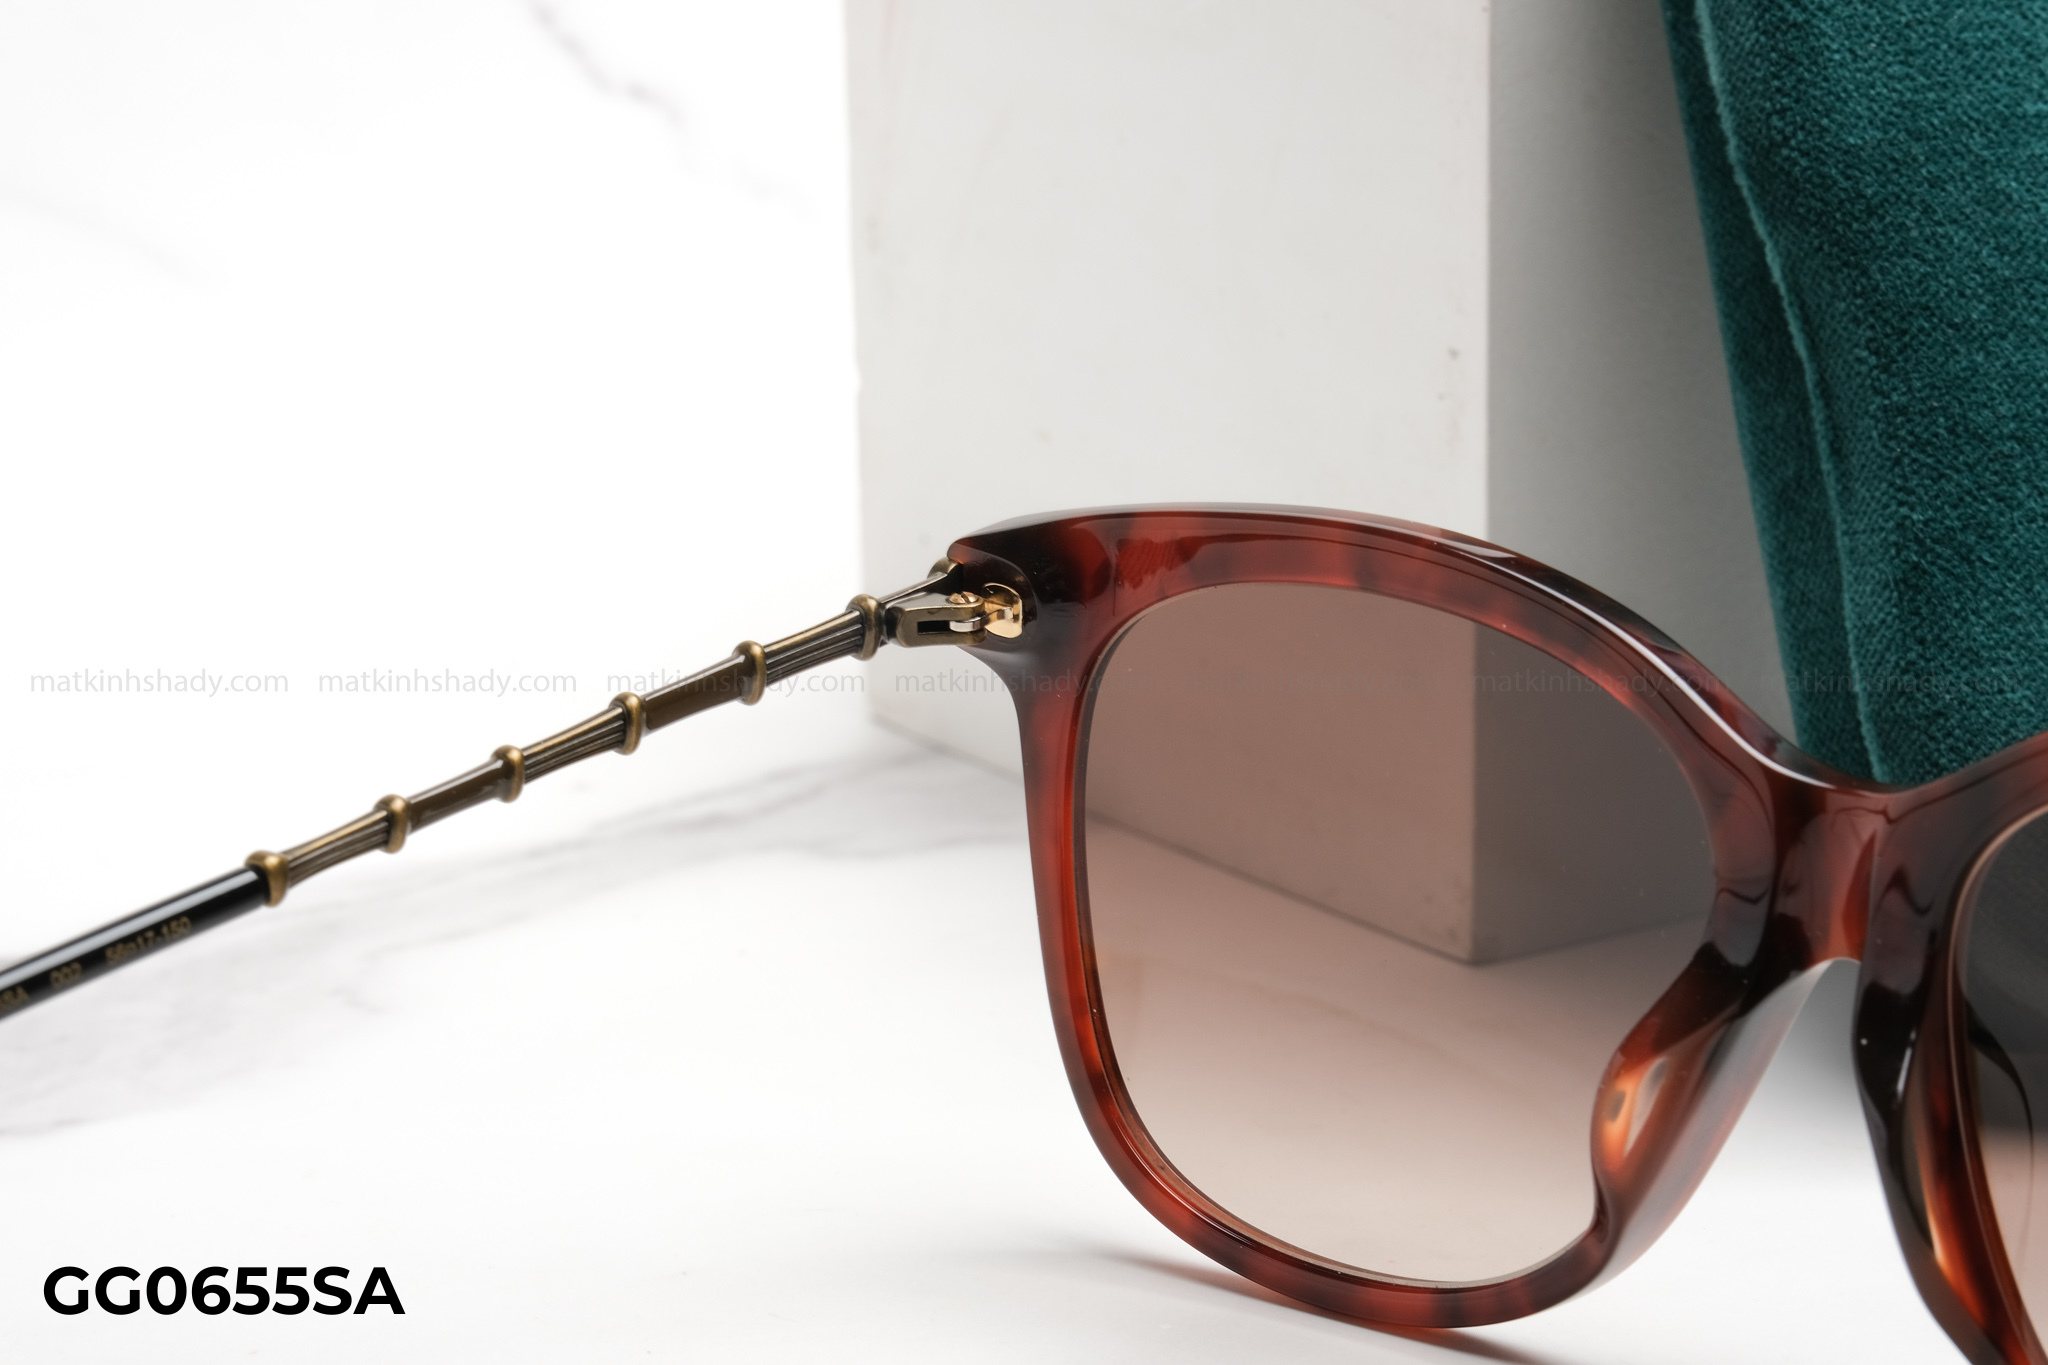  Gucci Eyewear - Sunglasses - GG0655SA 